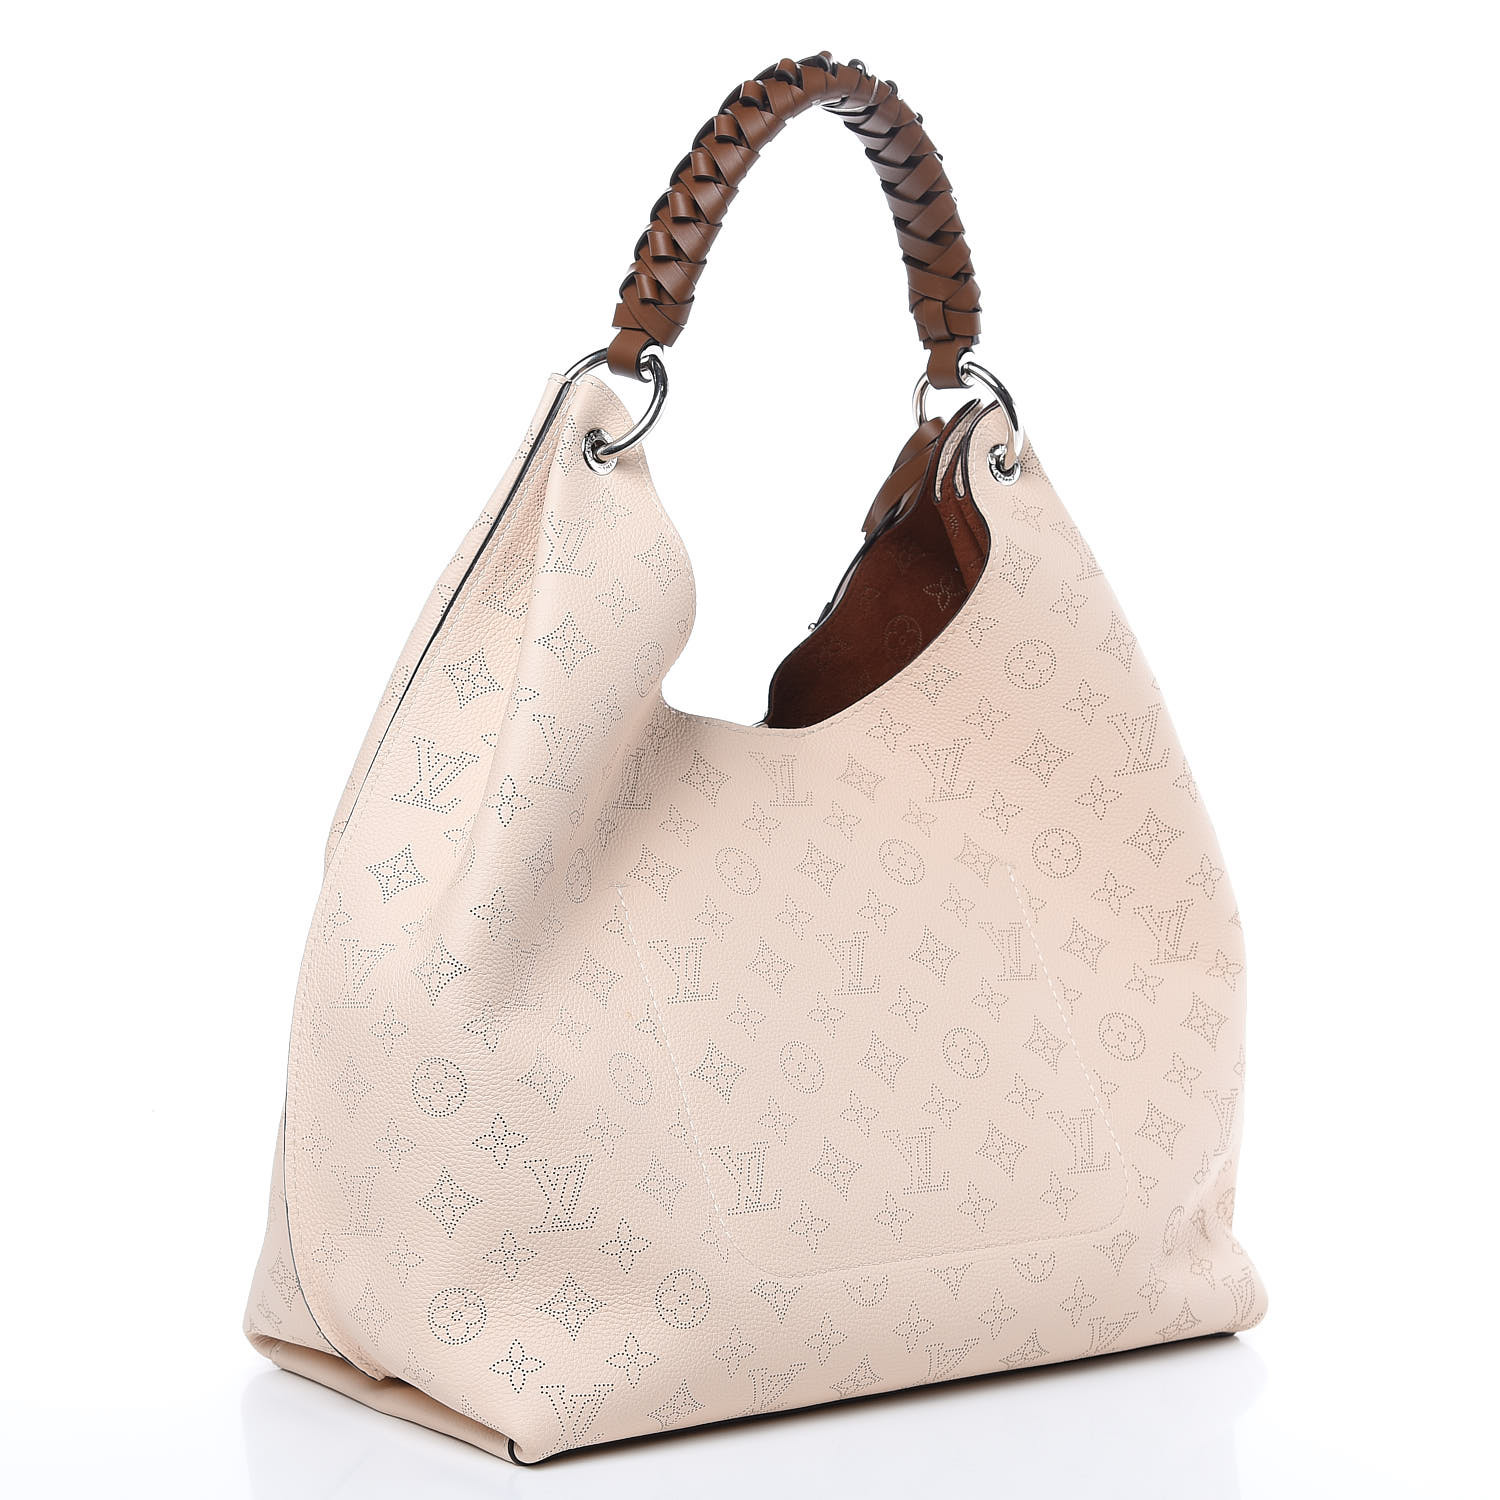 Carmel Mahina in Beige - Handbags M53188, LOUIS VUITTON ®